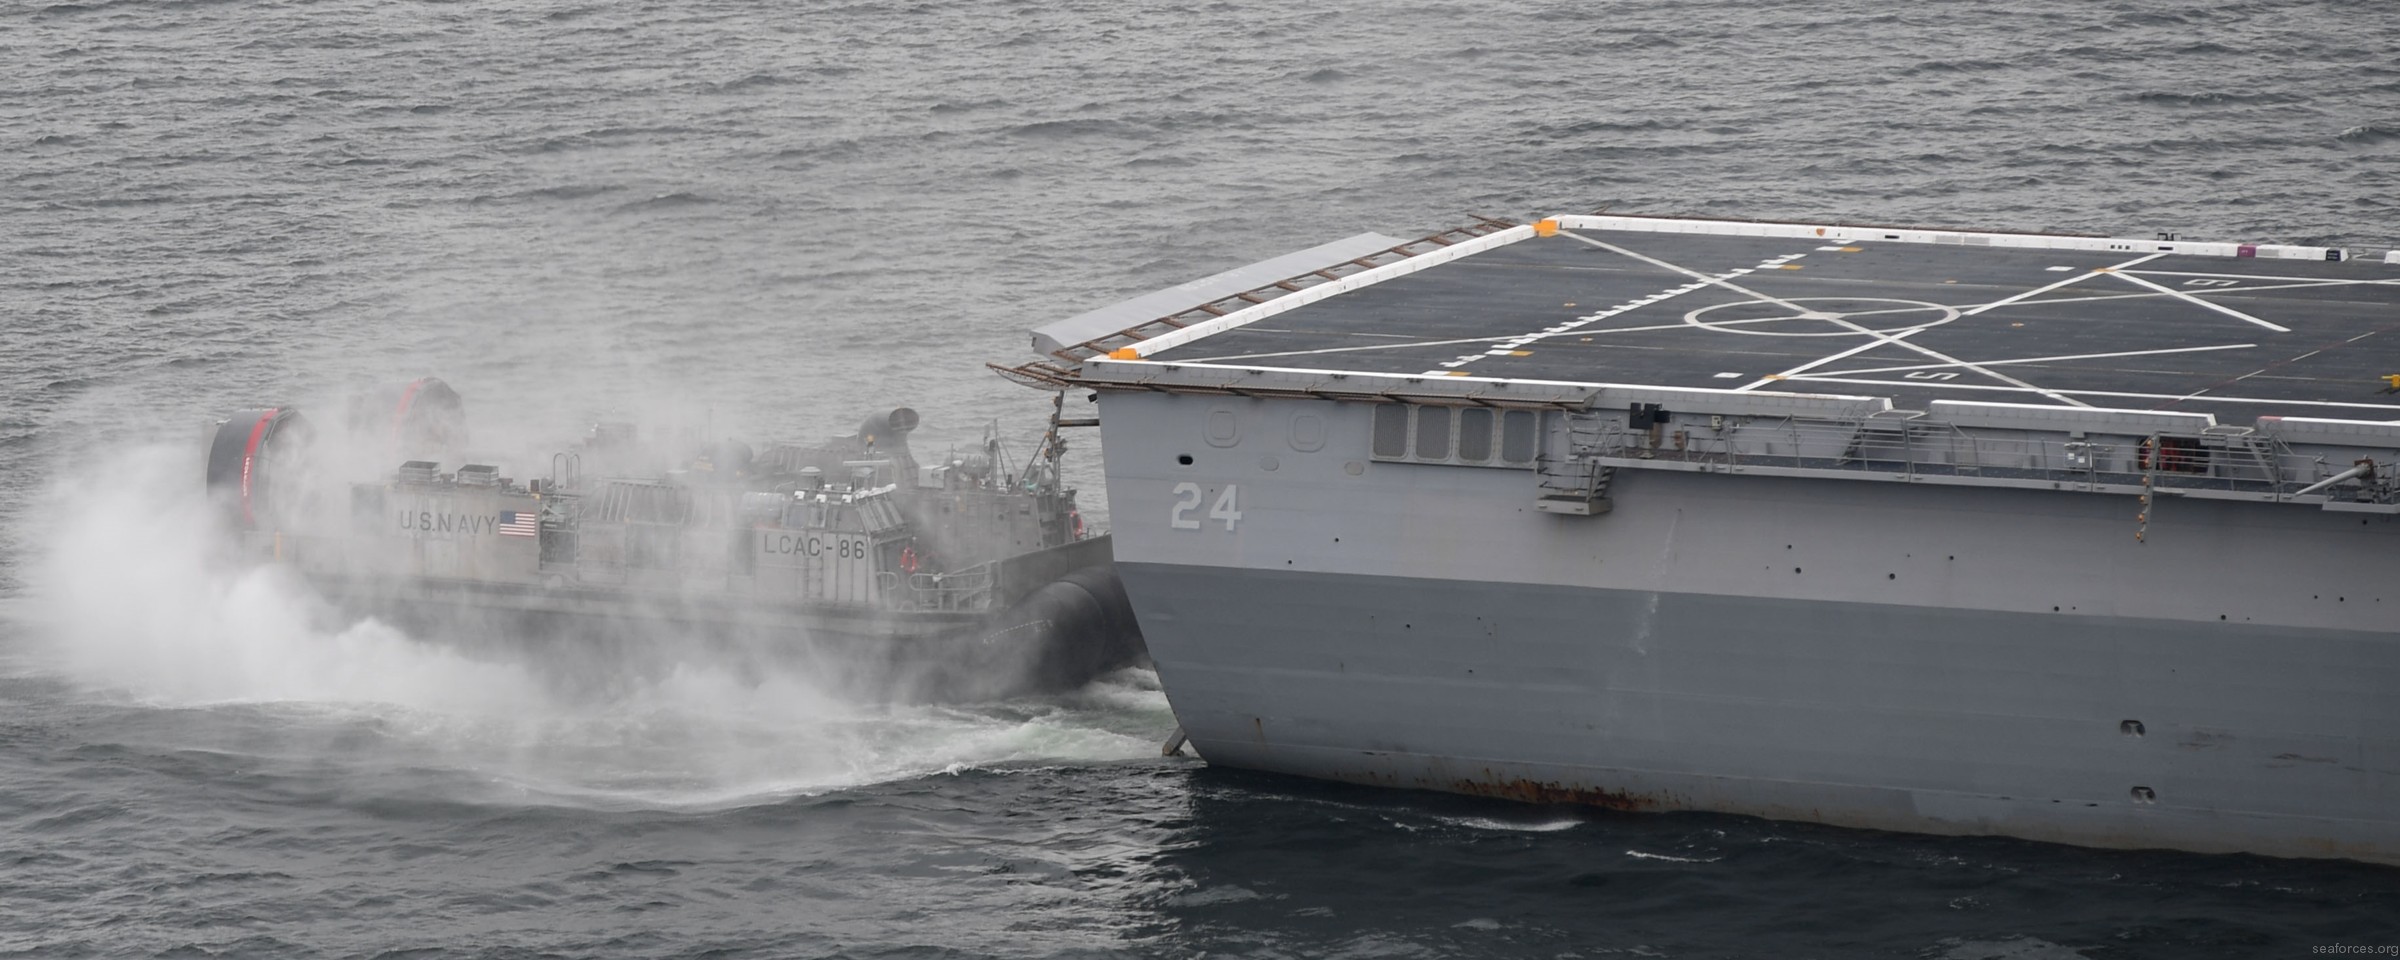 lpd-24 uss arlington san antonio class amphibious transport dock ship 65